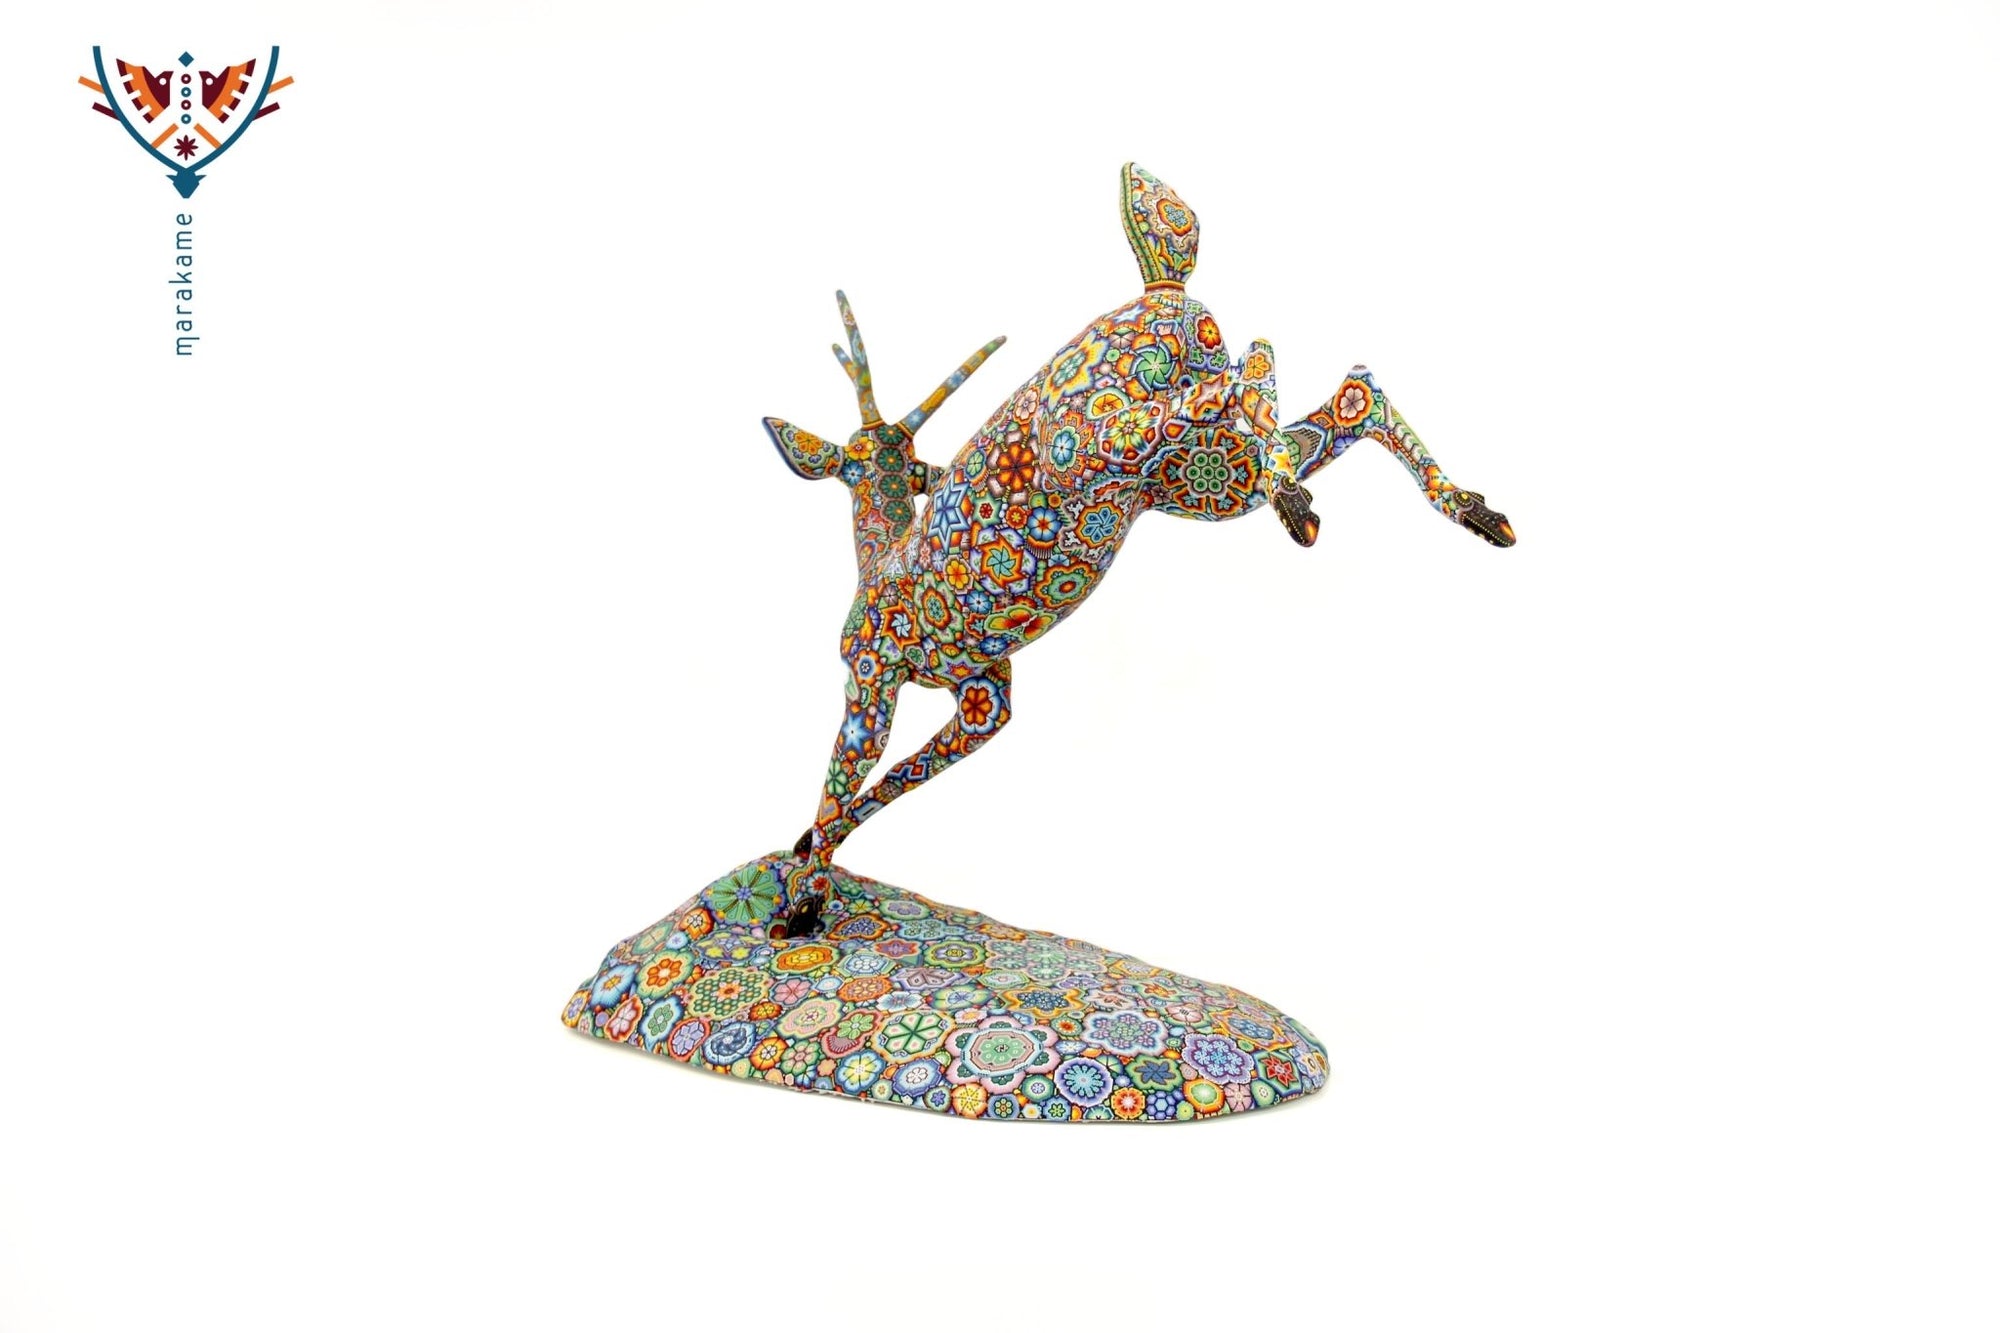 Sculpture d’art Huichol - Cerf bondissant - Maxa utsik+kame - Art Huichol - Marakame